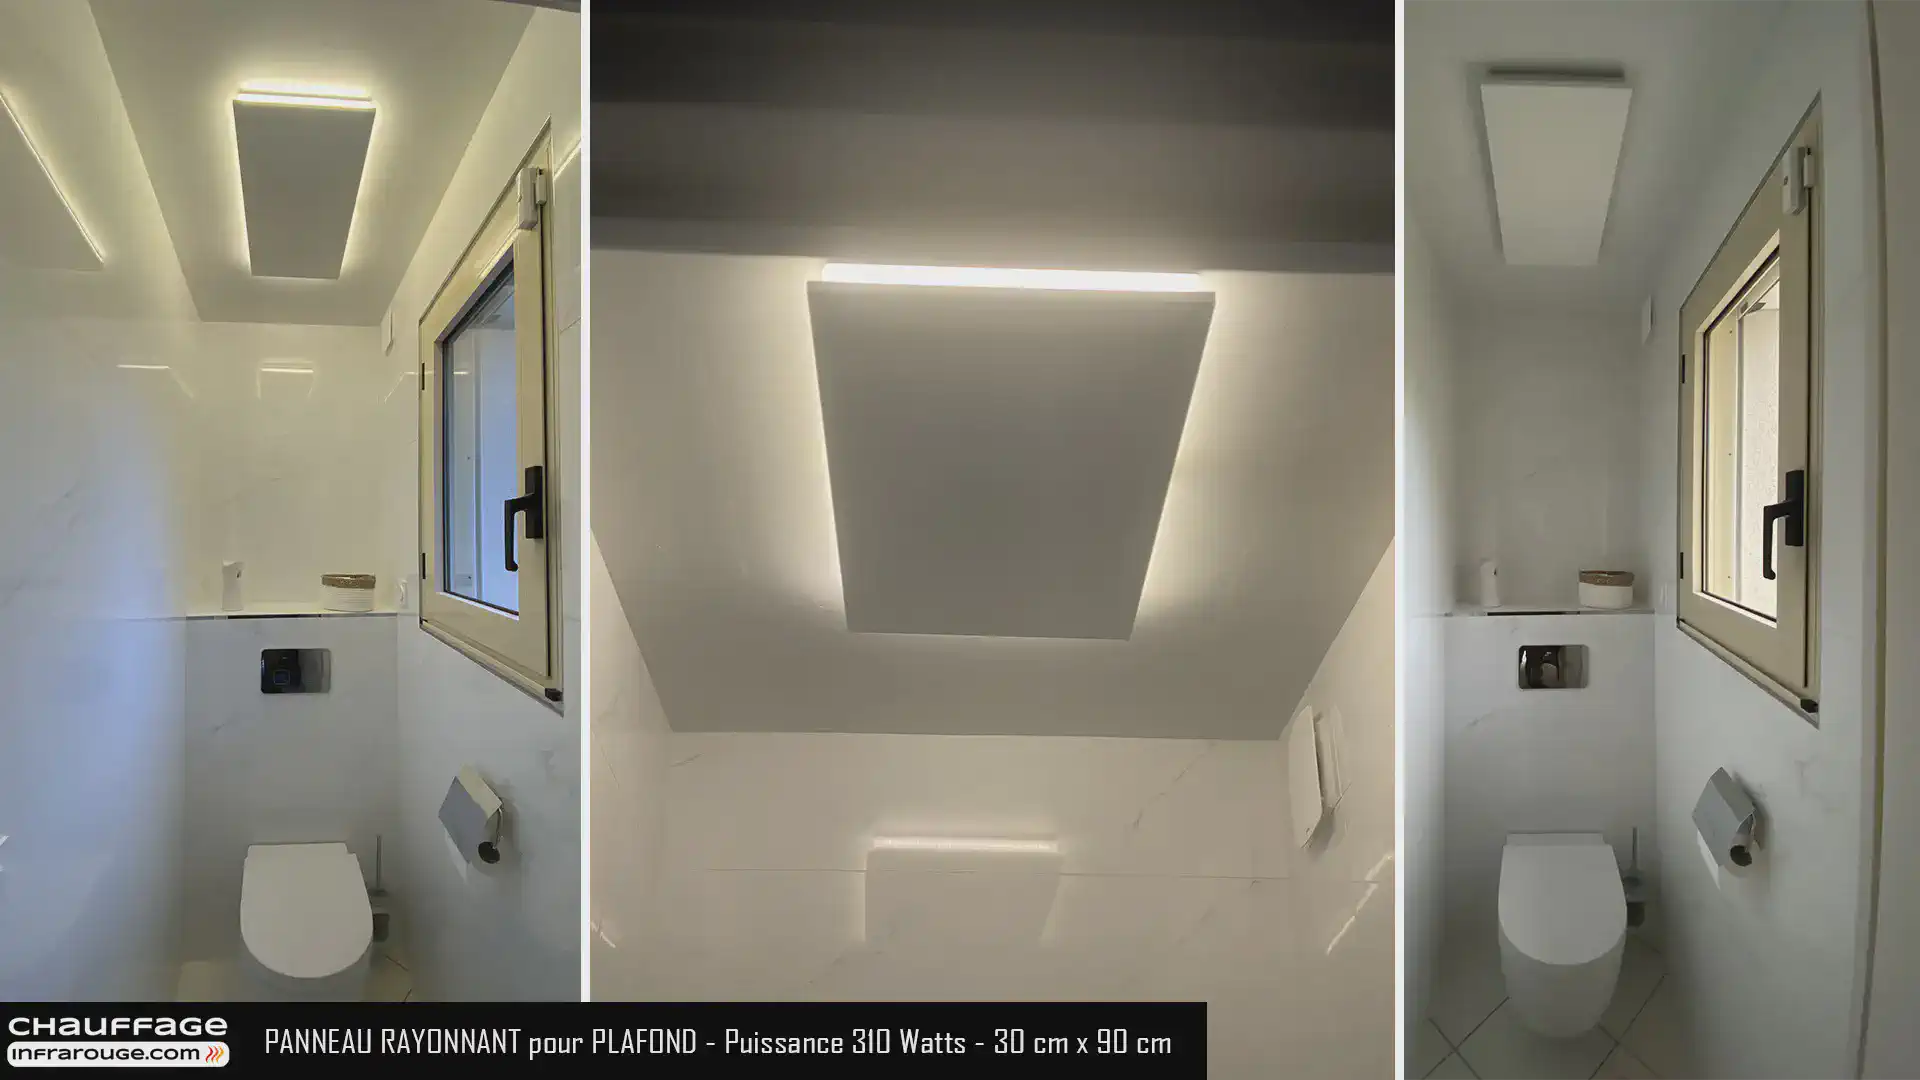 Panneau rayonnant infrarouge plafond avec suspension Heat4all extra plat 310W Watts - 30 cm x 90 cm pose verticale, horizontale, murale, plafond, rampants